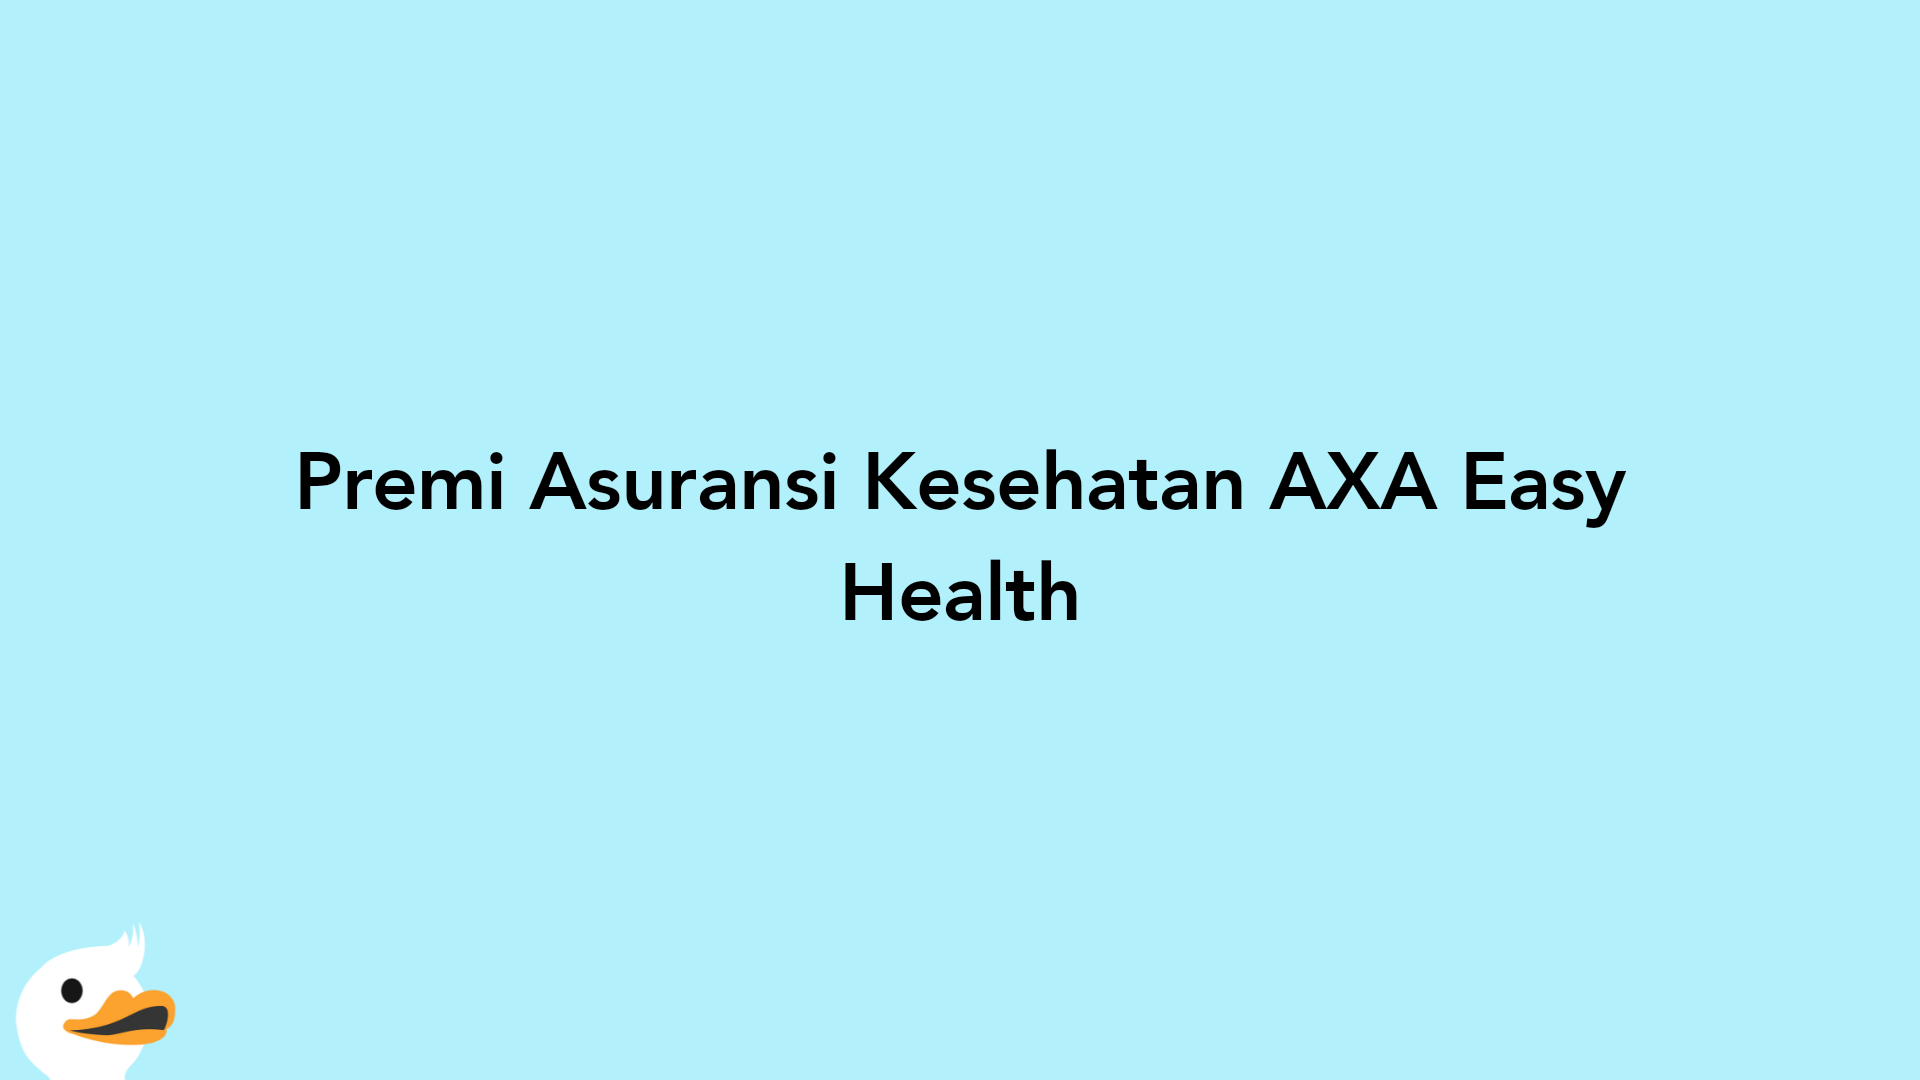 Premi Asuransi Kesehatan AXA Easy Health